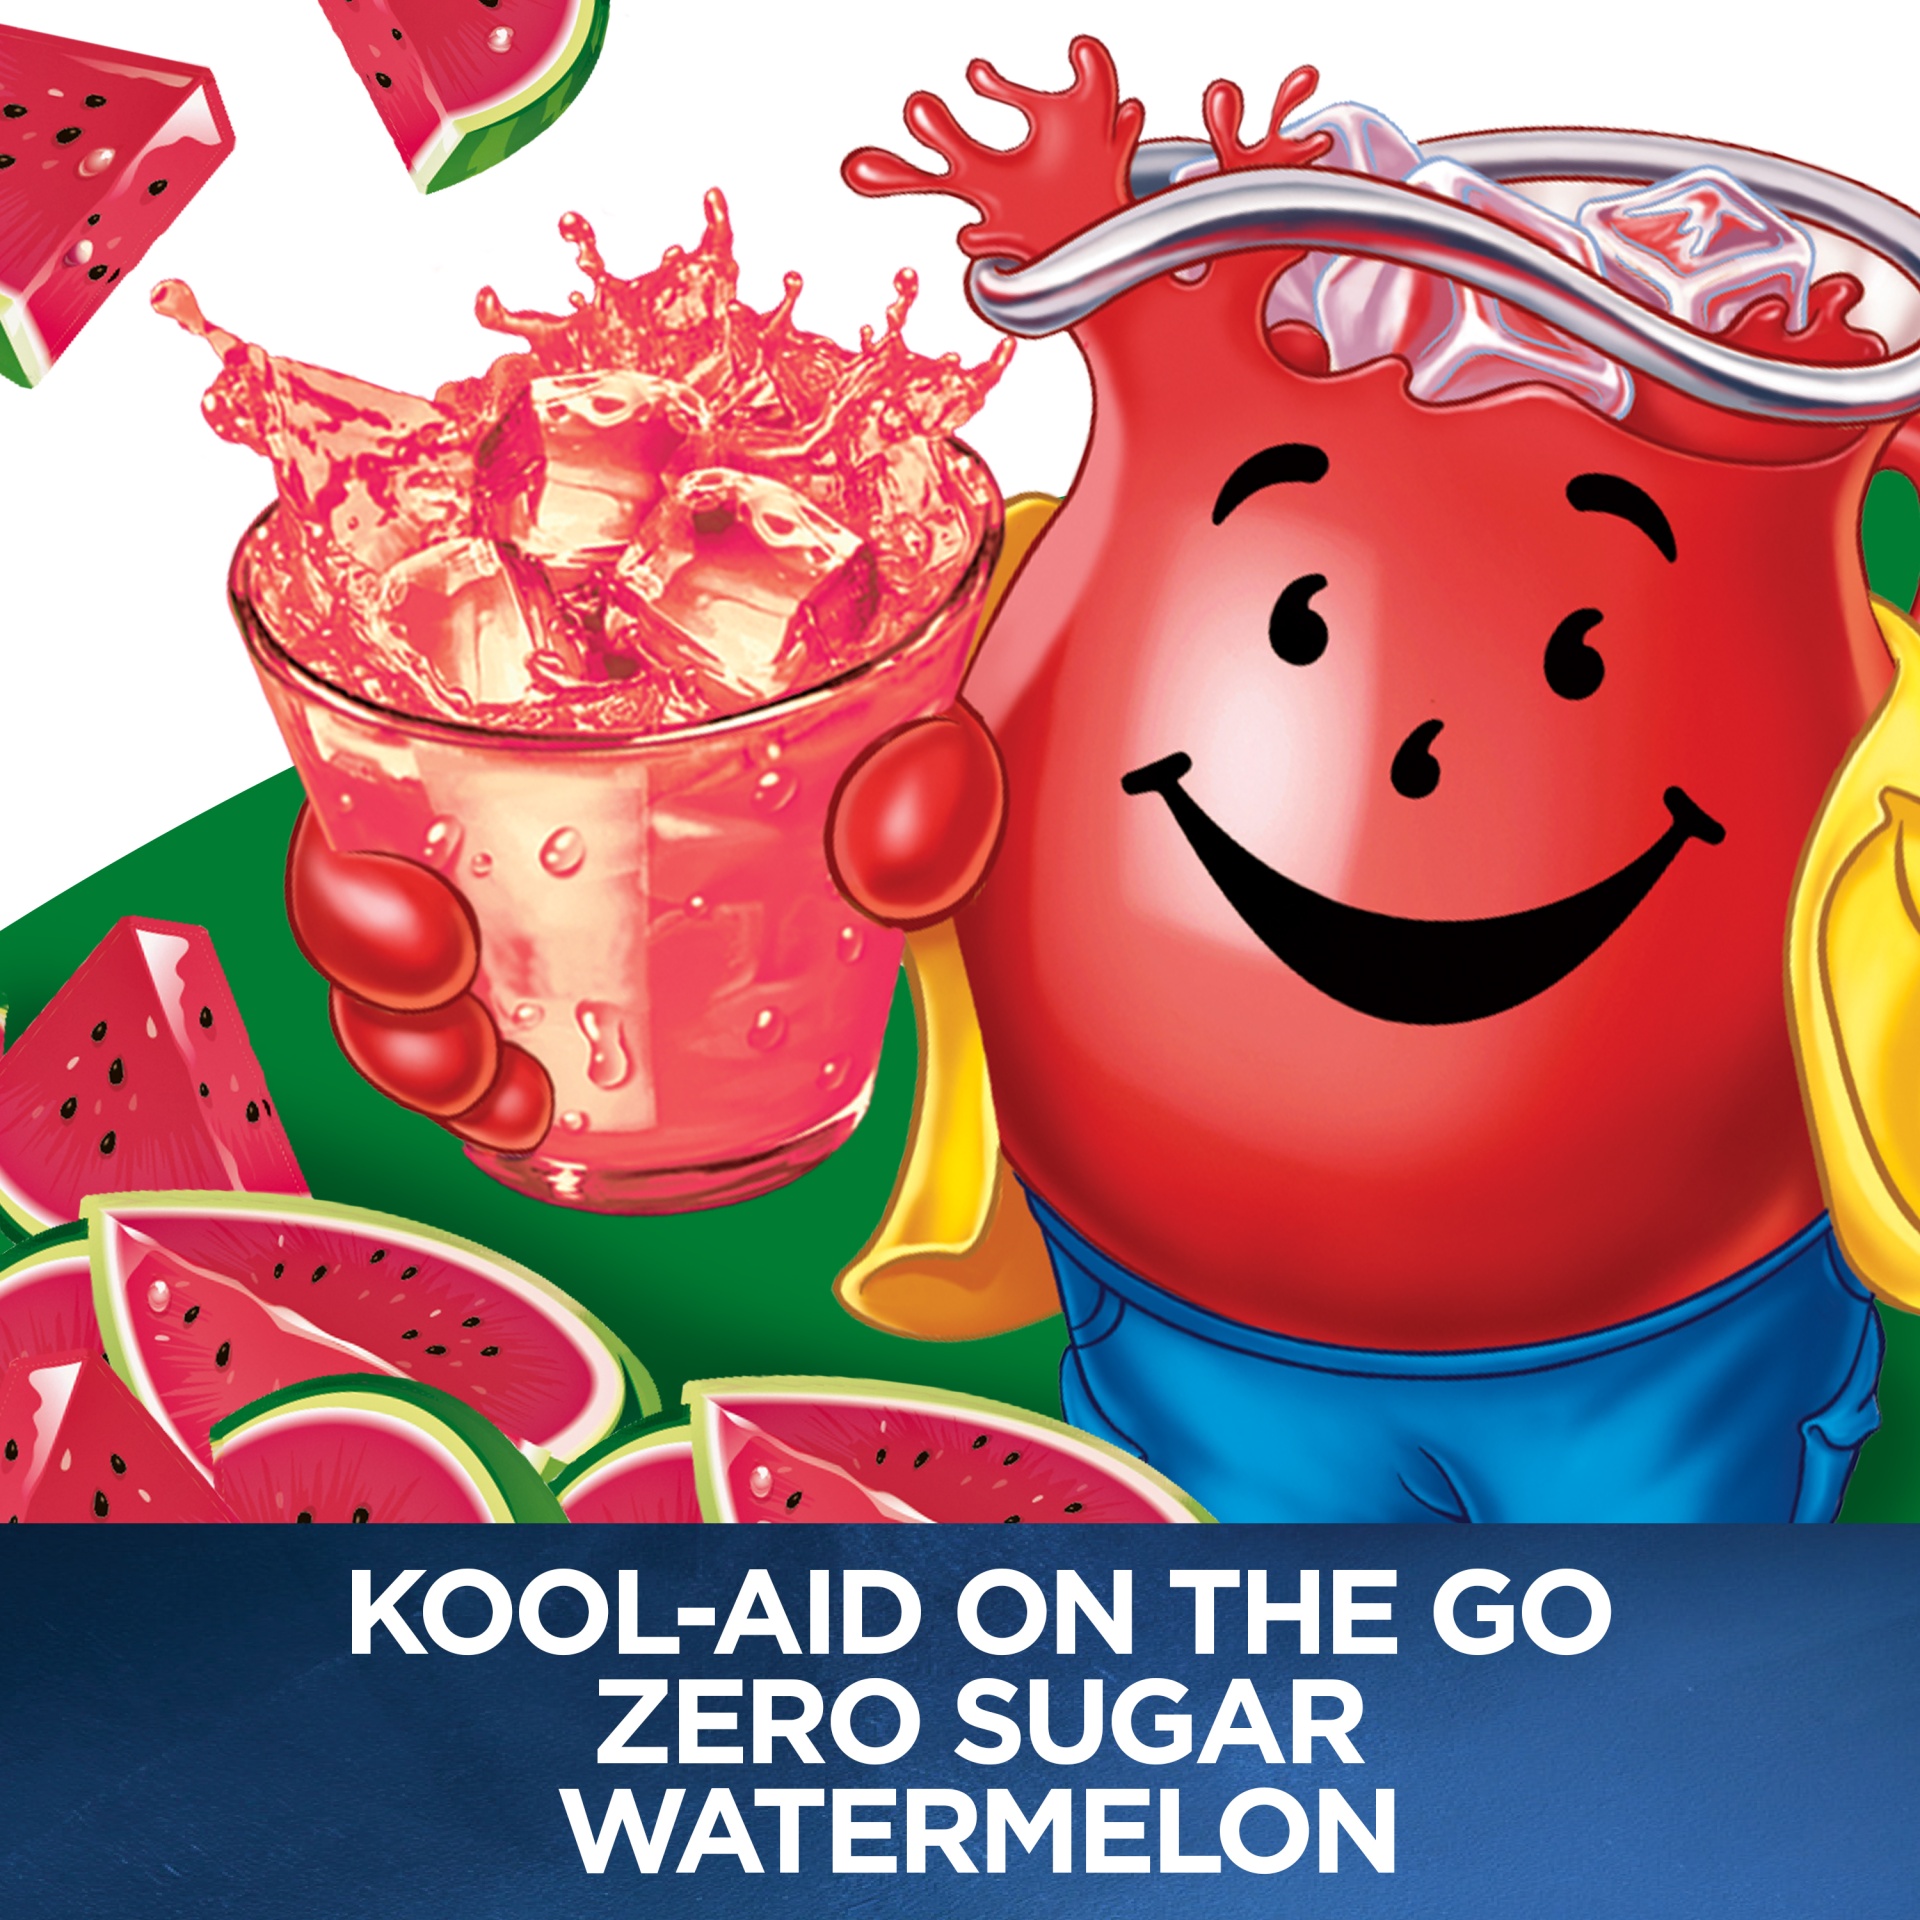 Kool-Aid Jammers Powdered Drink Mix, Zero Sugar Watermelon, 6 ct ...